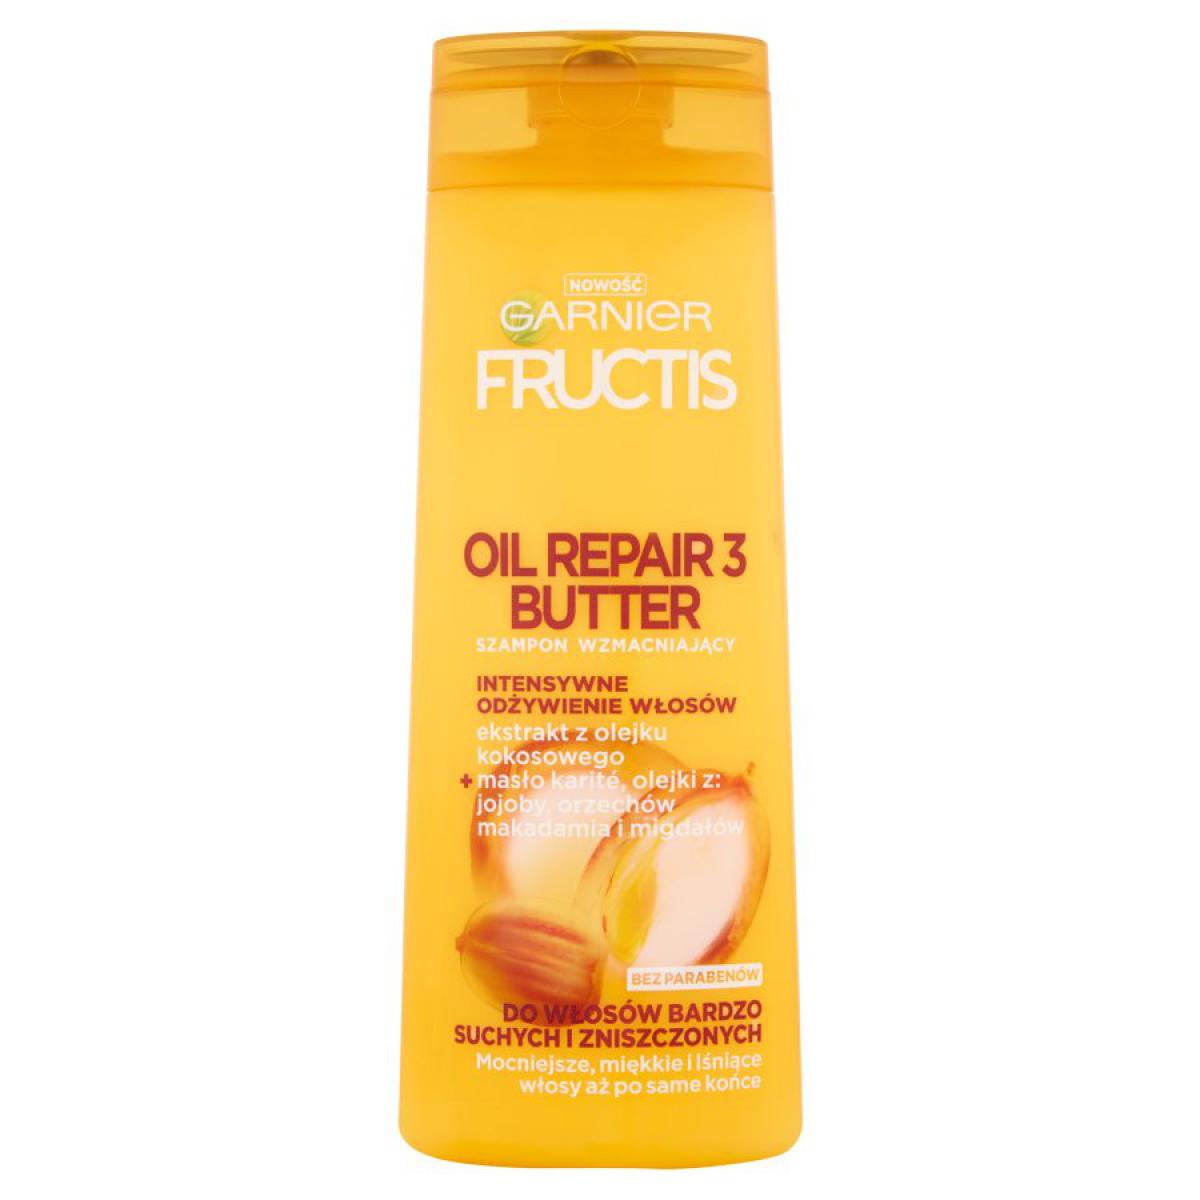 شامپو ترمیم کننده روغن های مغذی Oil Repair 3 حجم 400 میلی لیتر - Garnier Fructis Oil Repair 3 Butter Shampoo